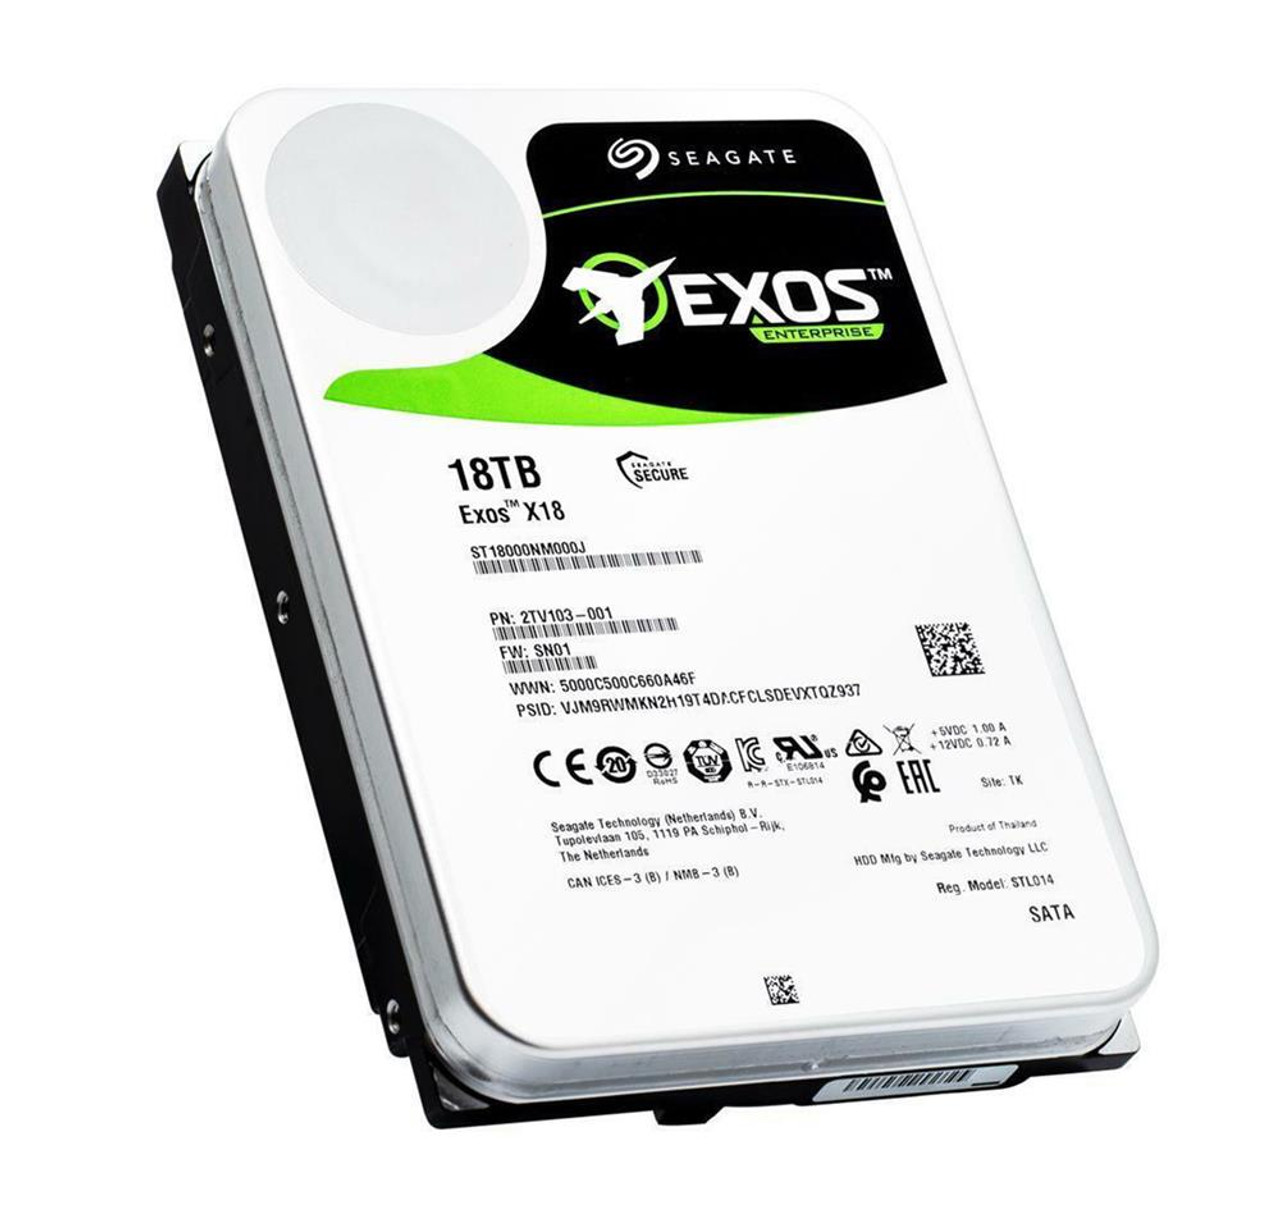 Seagate Exos X18 18TB 7200RPM SATA 6Gbps 256MB Cache (512e/4kn) 3.5-inch Internal Hard Disk Drive